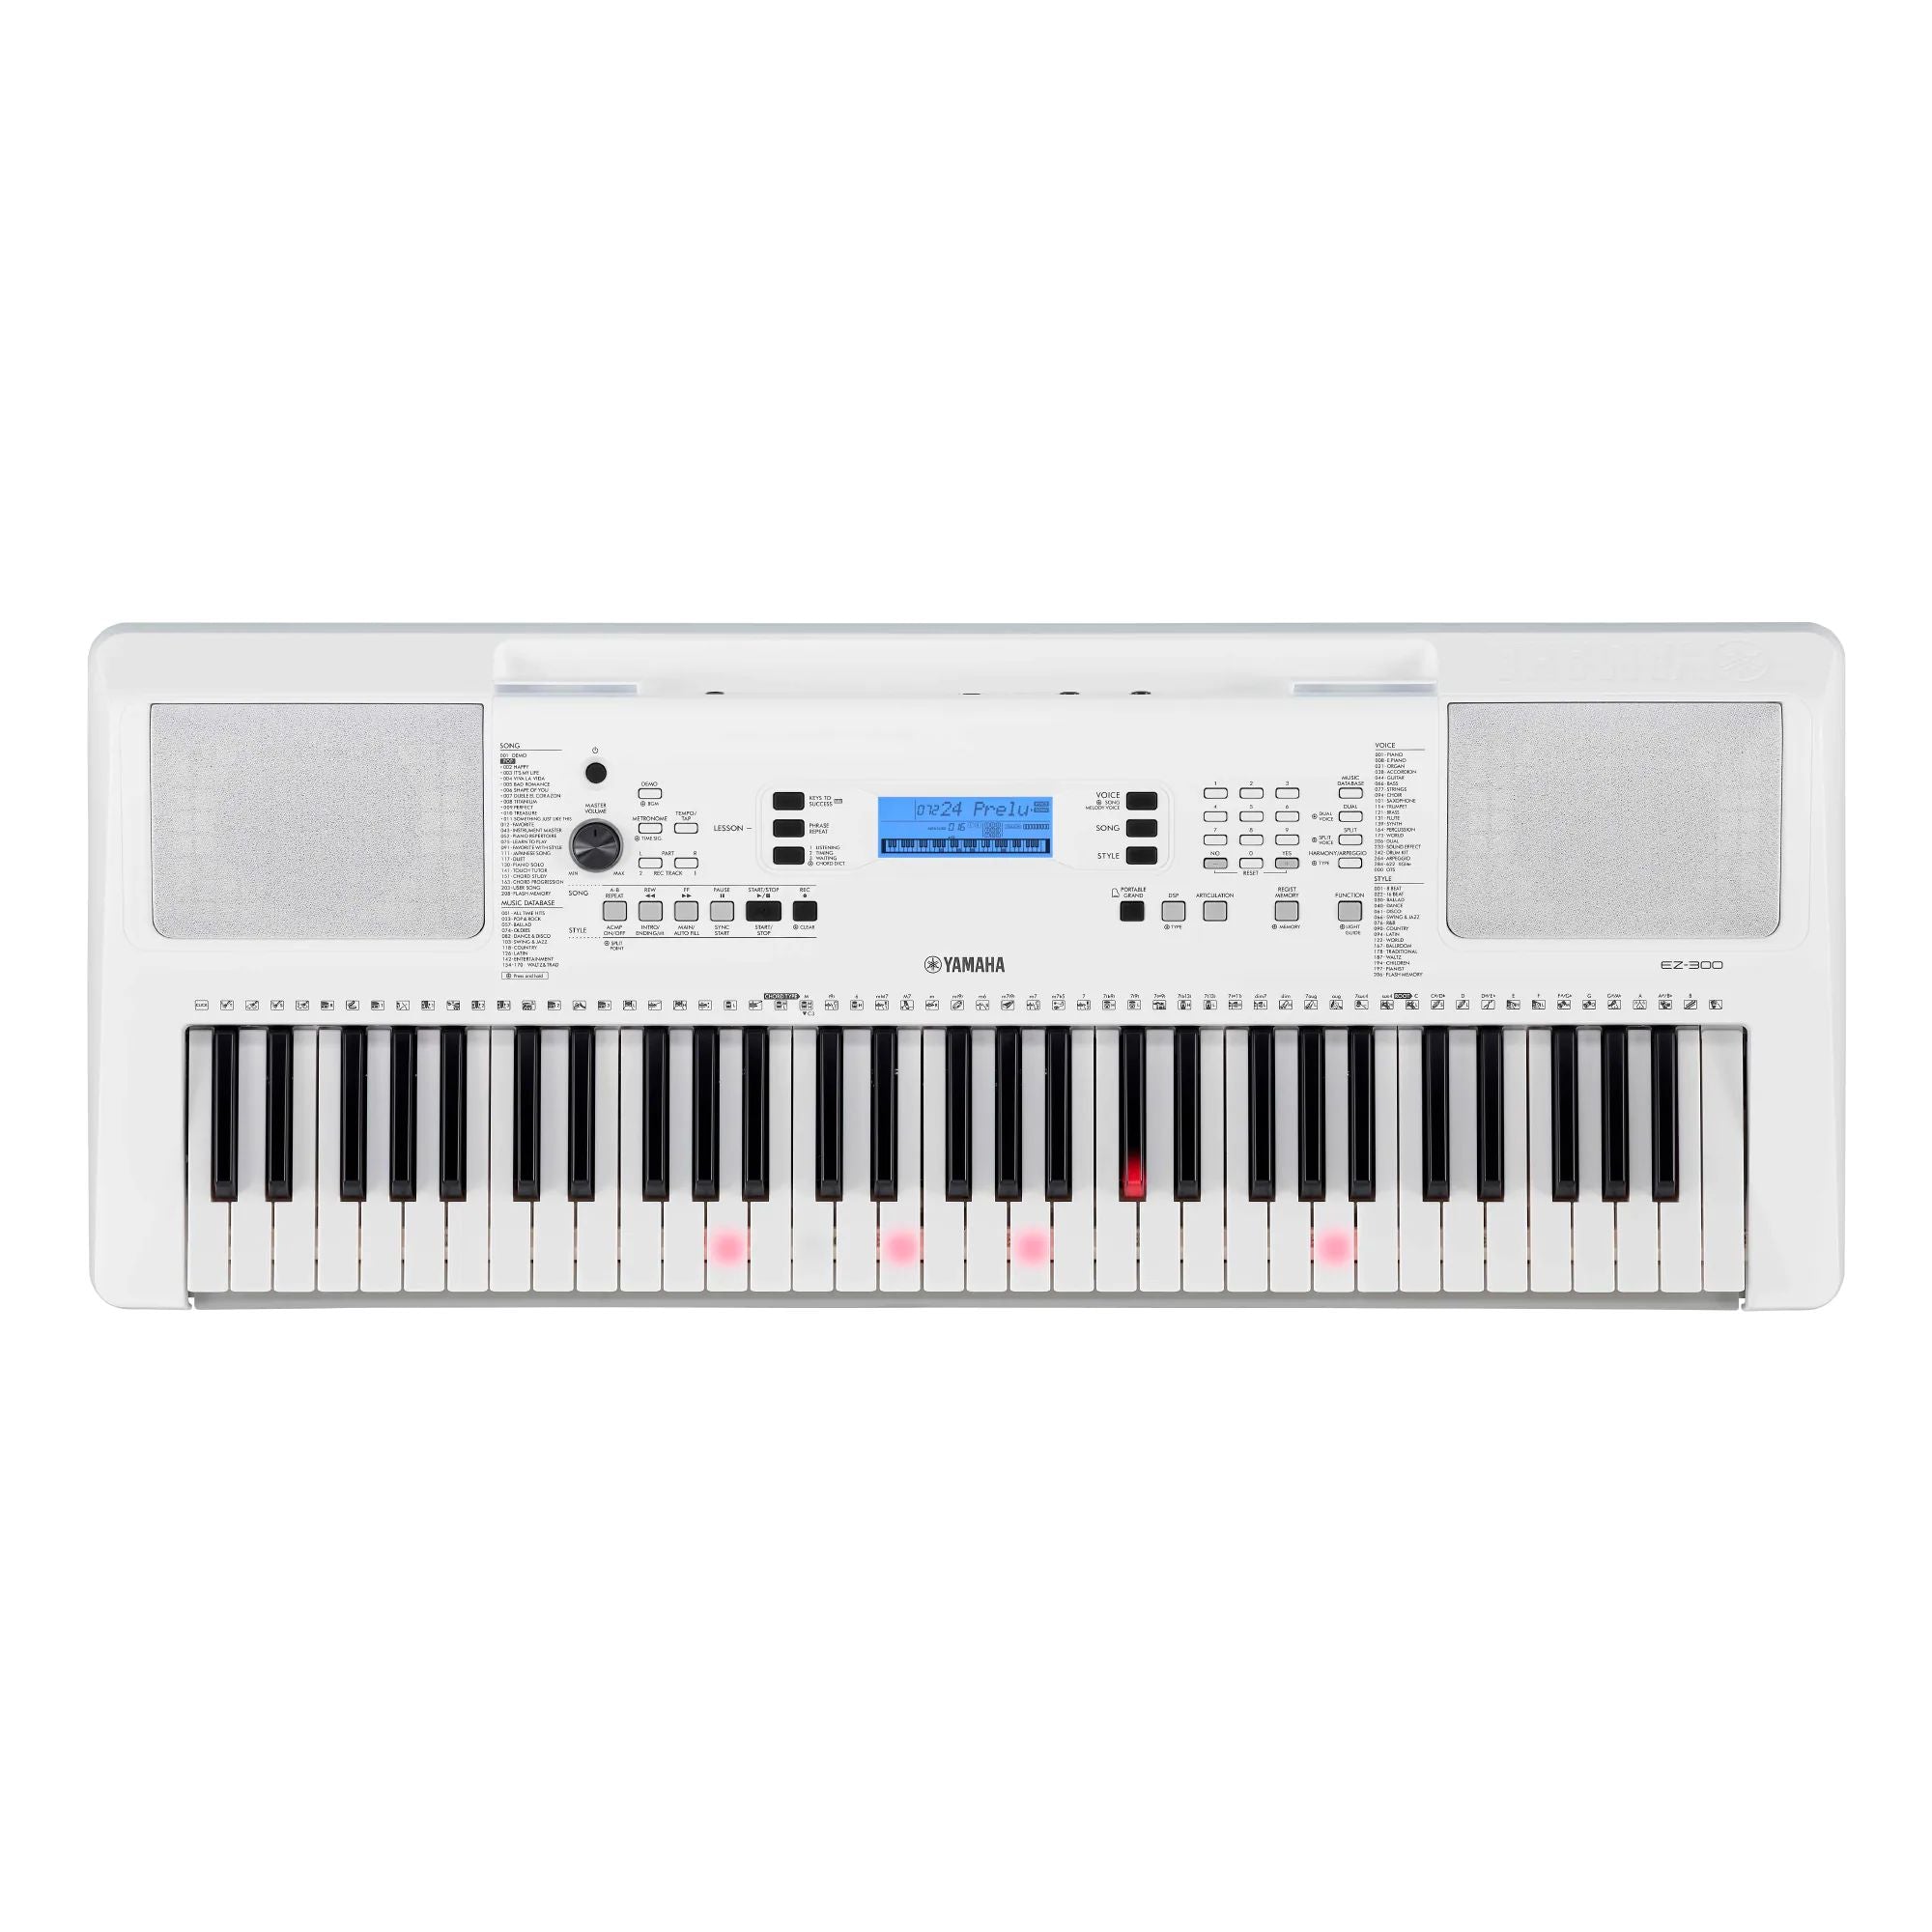 Yamaha EZ-300 Portable Keyboard with Lighted Keys